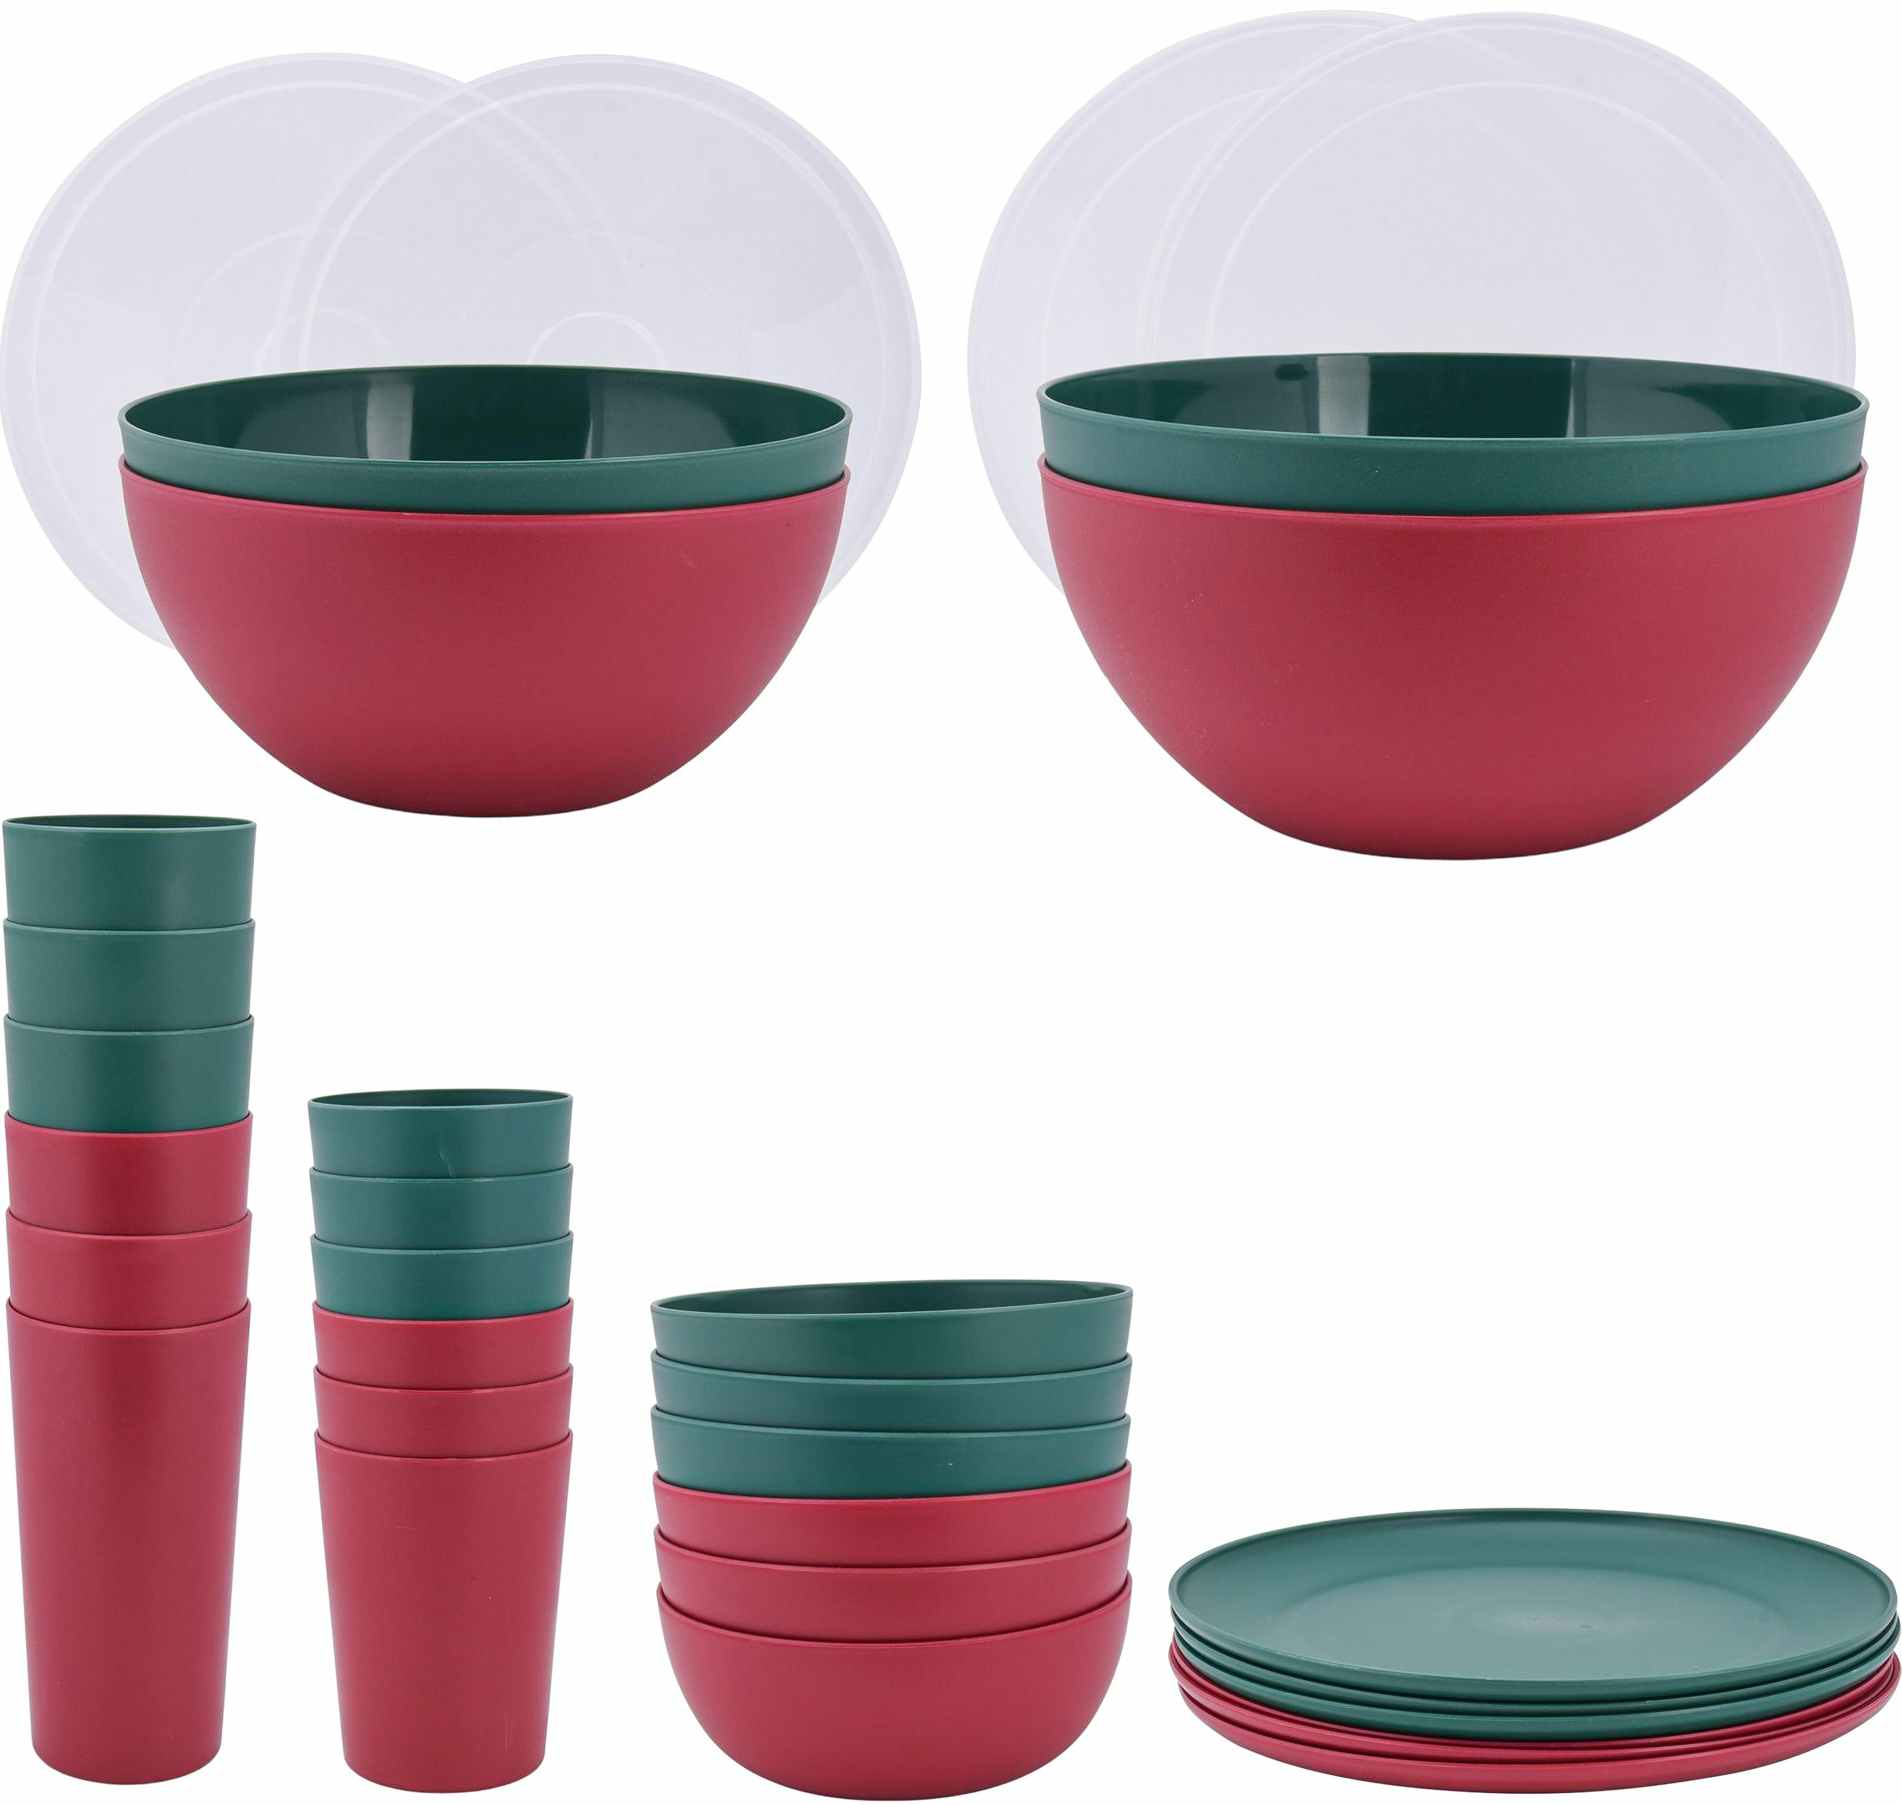 walmart-dinnerware-sets-mainstays-plastic-red-and-green-2022